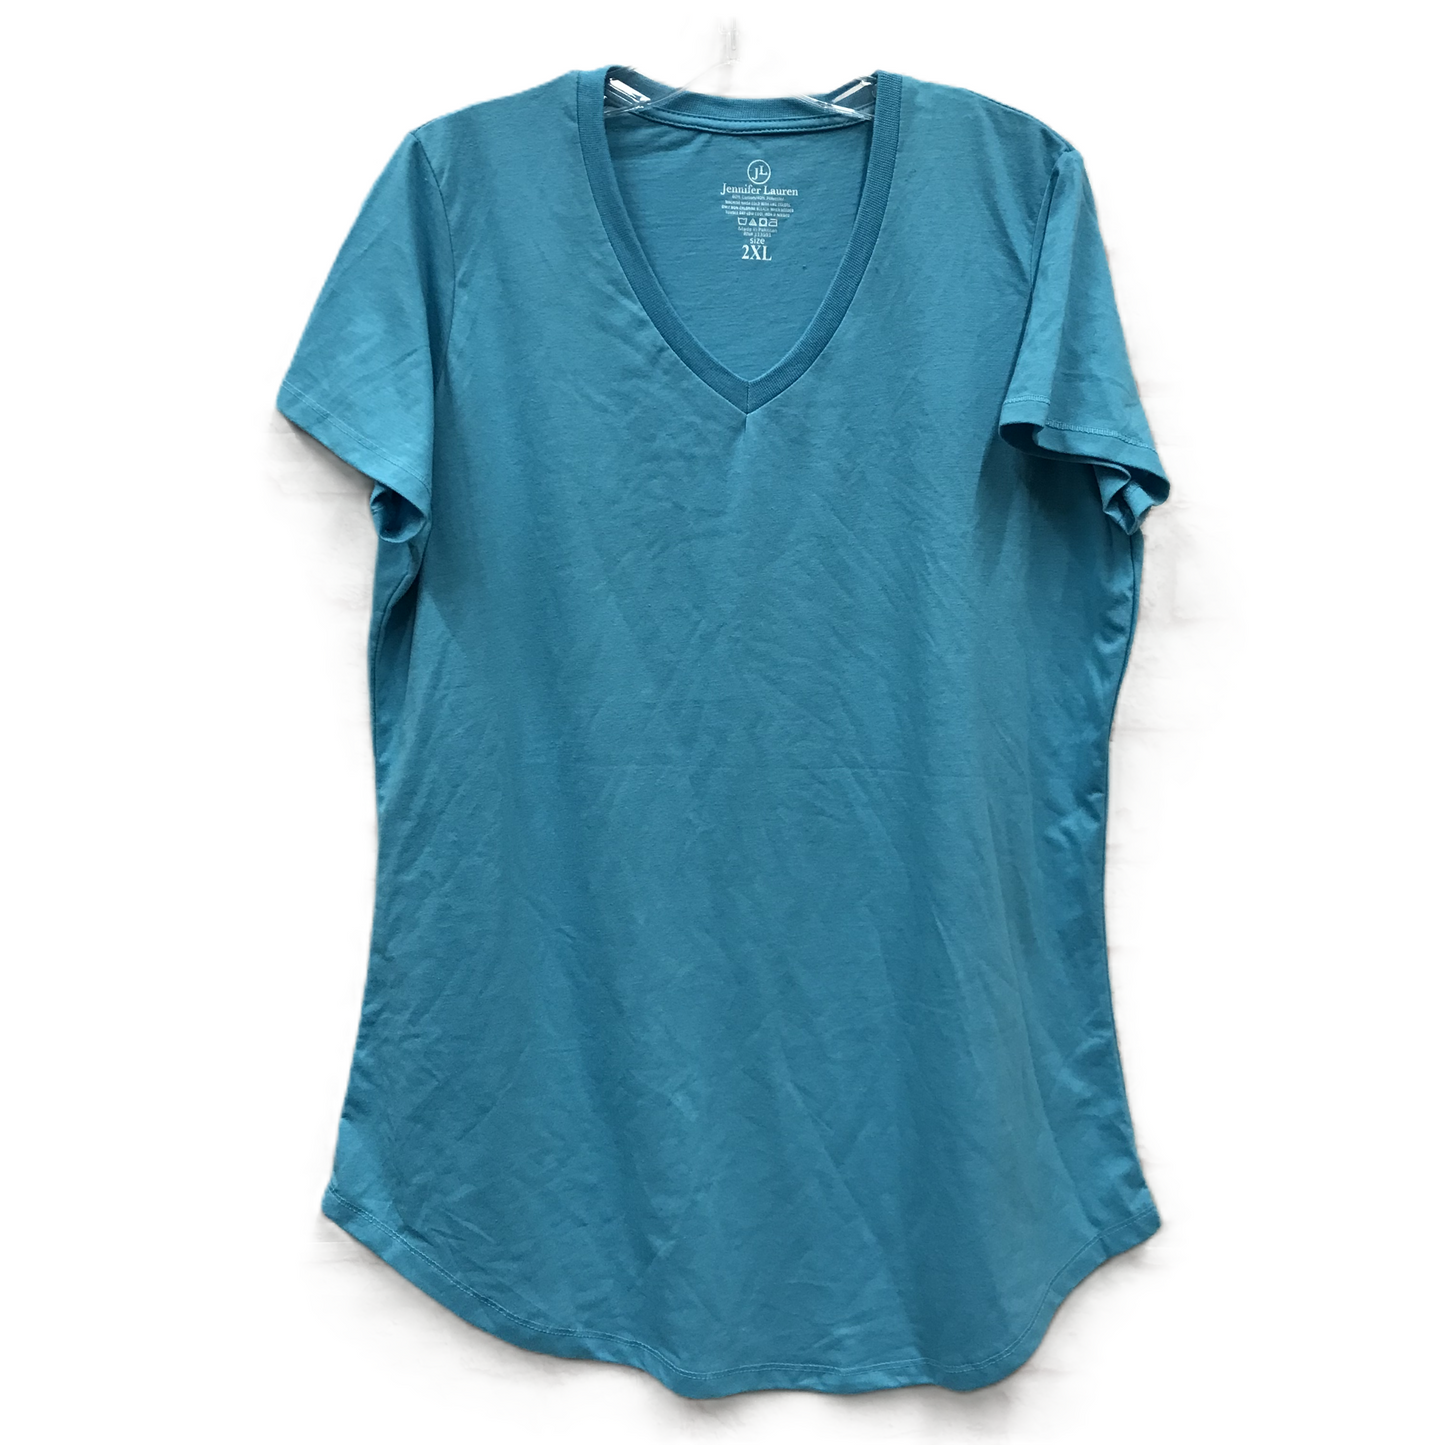 Blue Top Short Sleeve Basic By Jennifer Lauren, Size: 2x